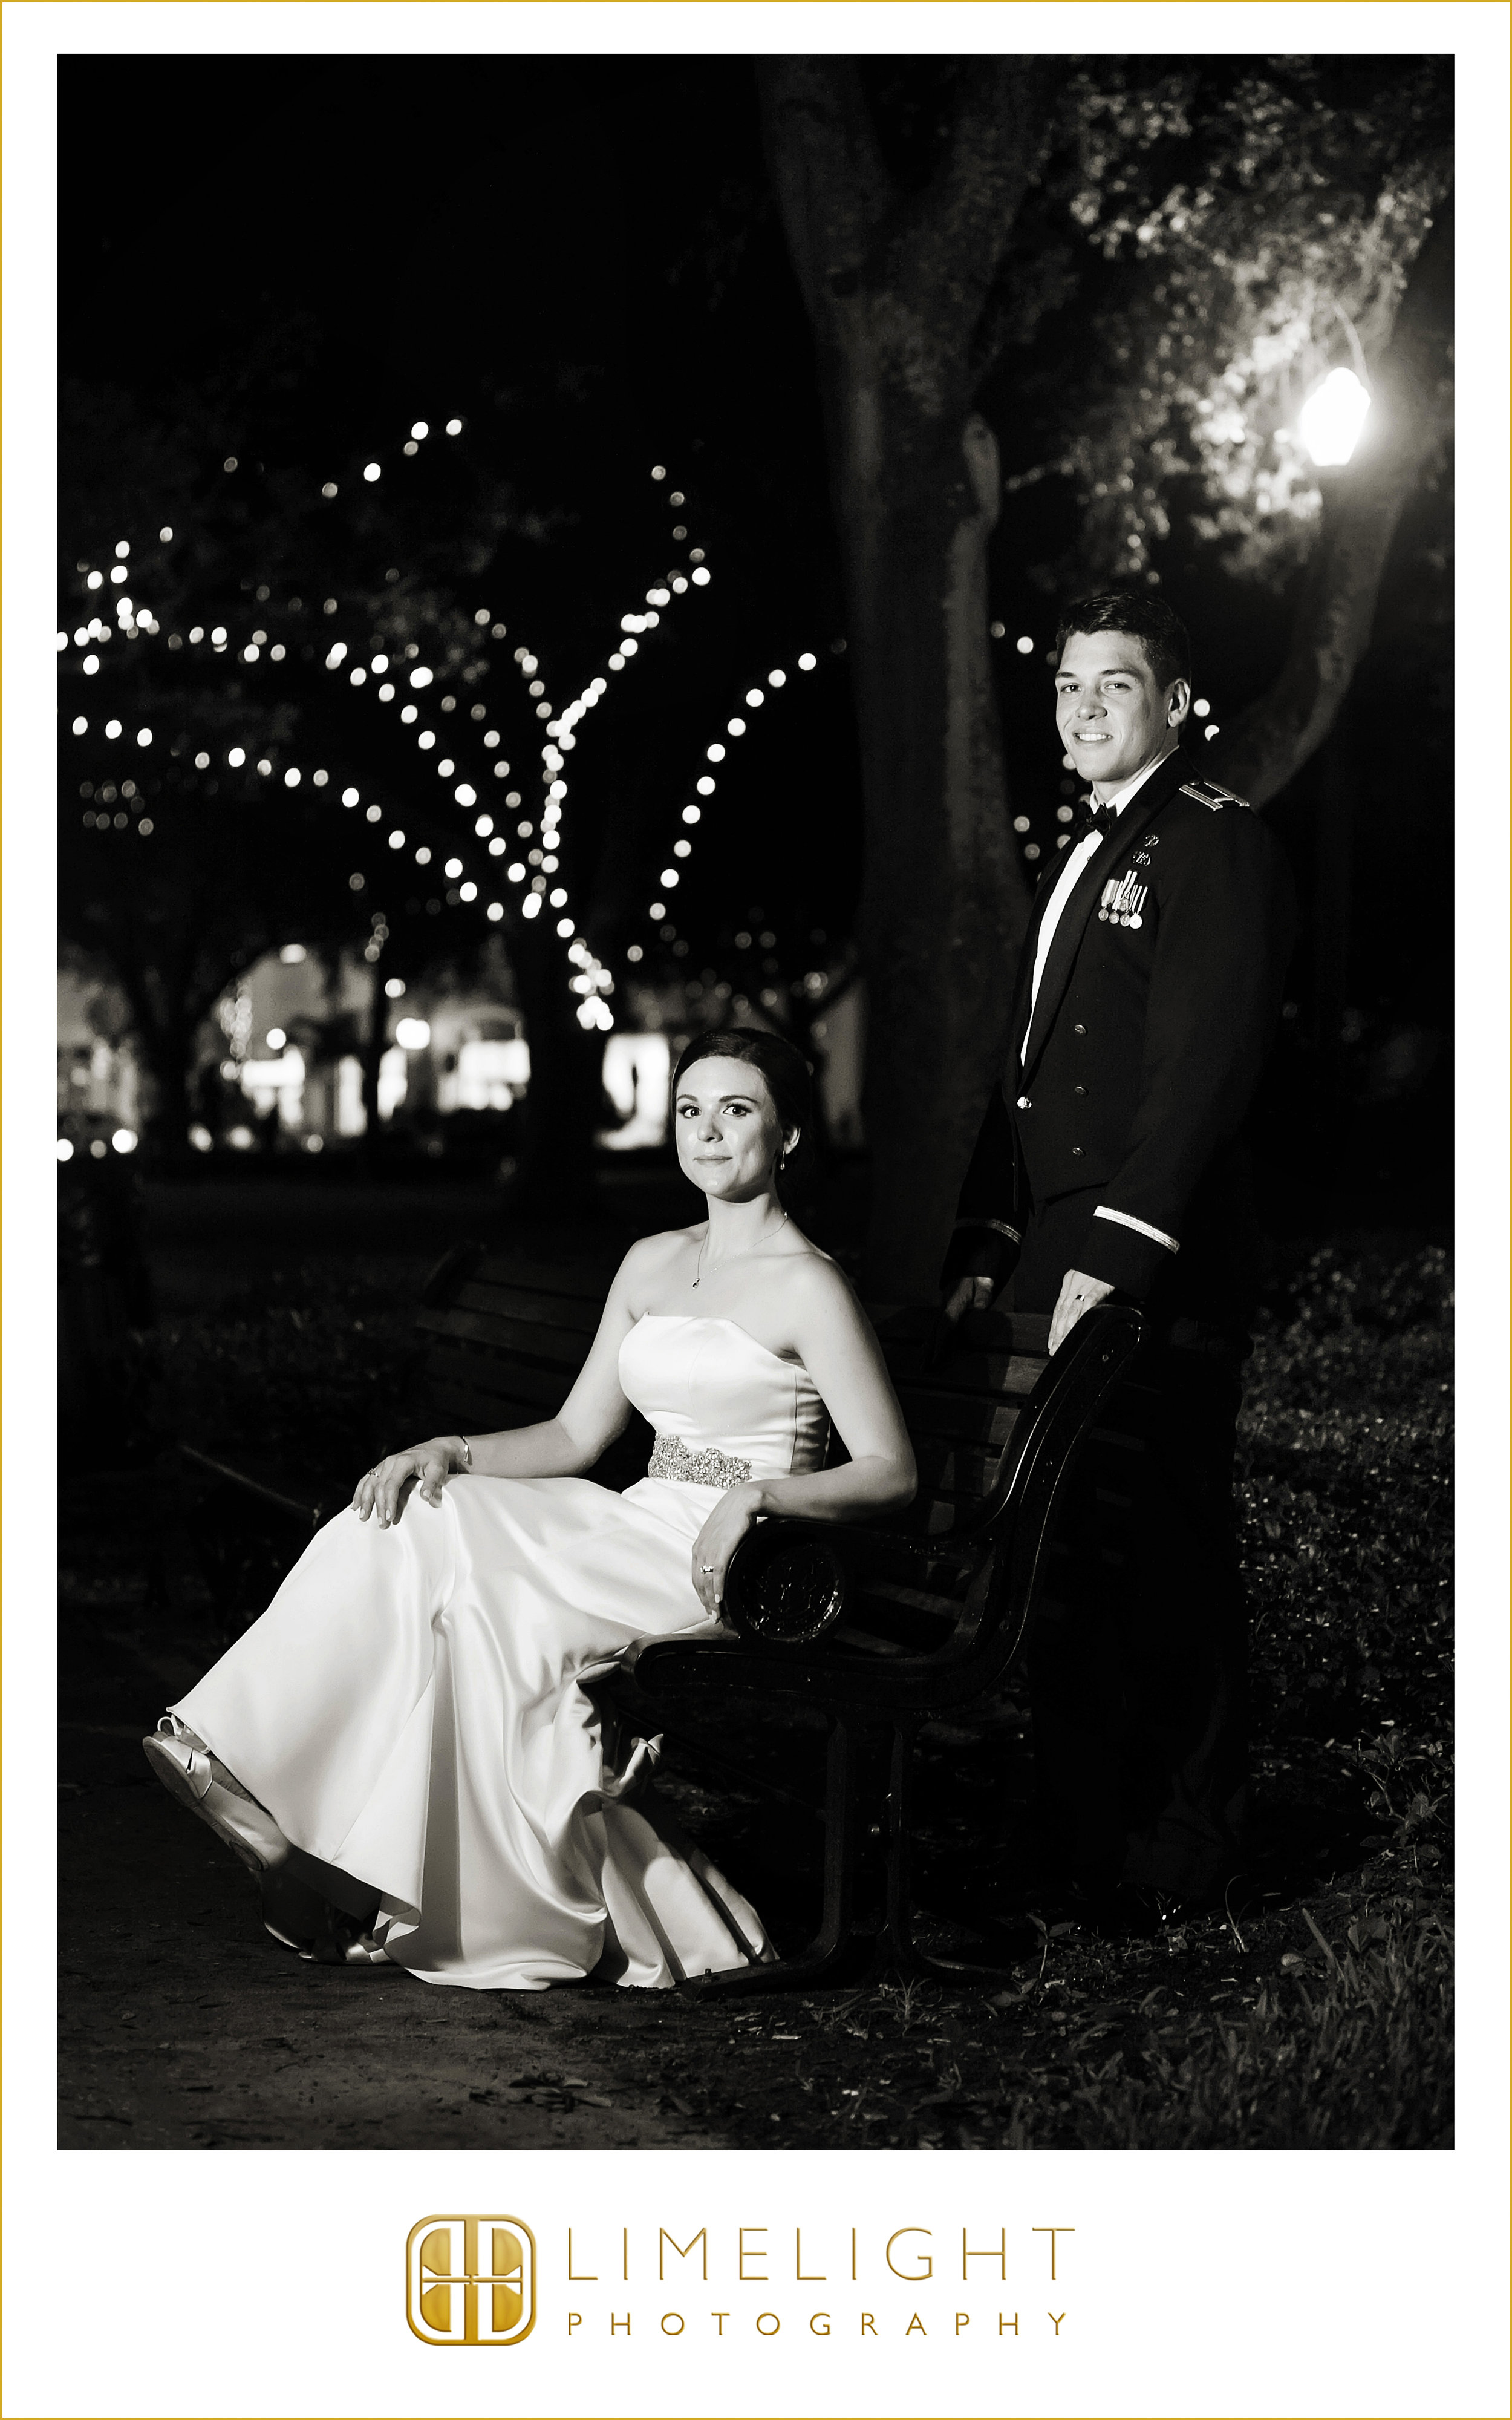 Copy of Portraits | Mr. & Mrs. | Wedding